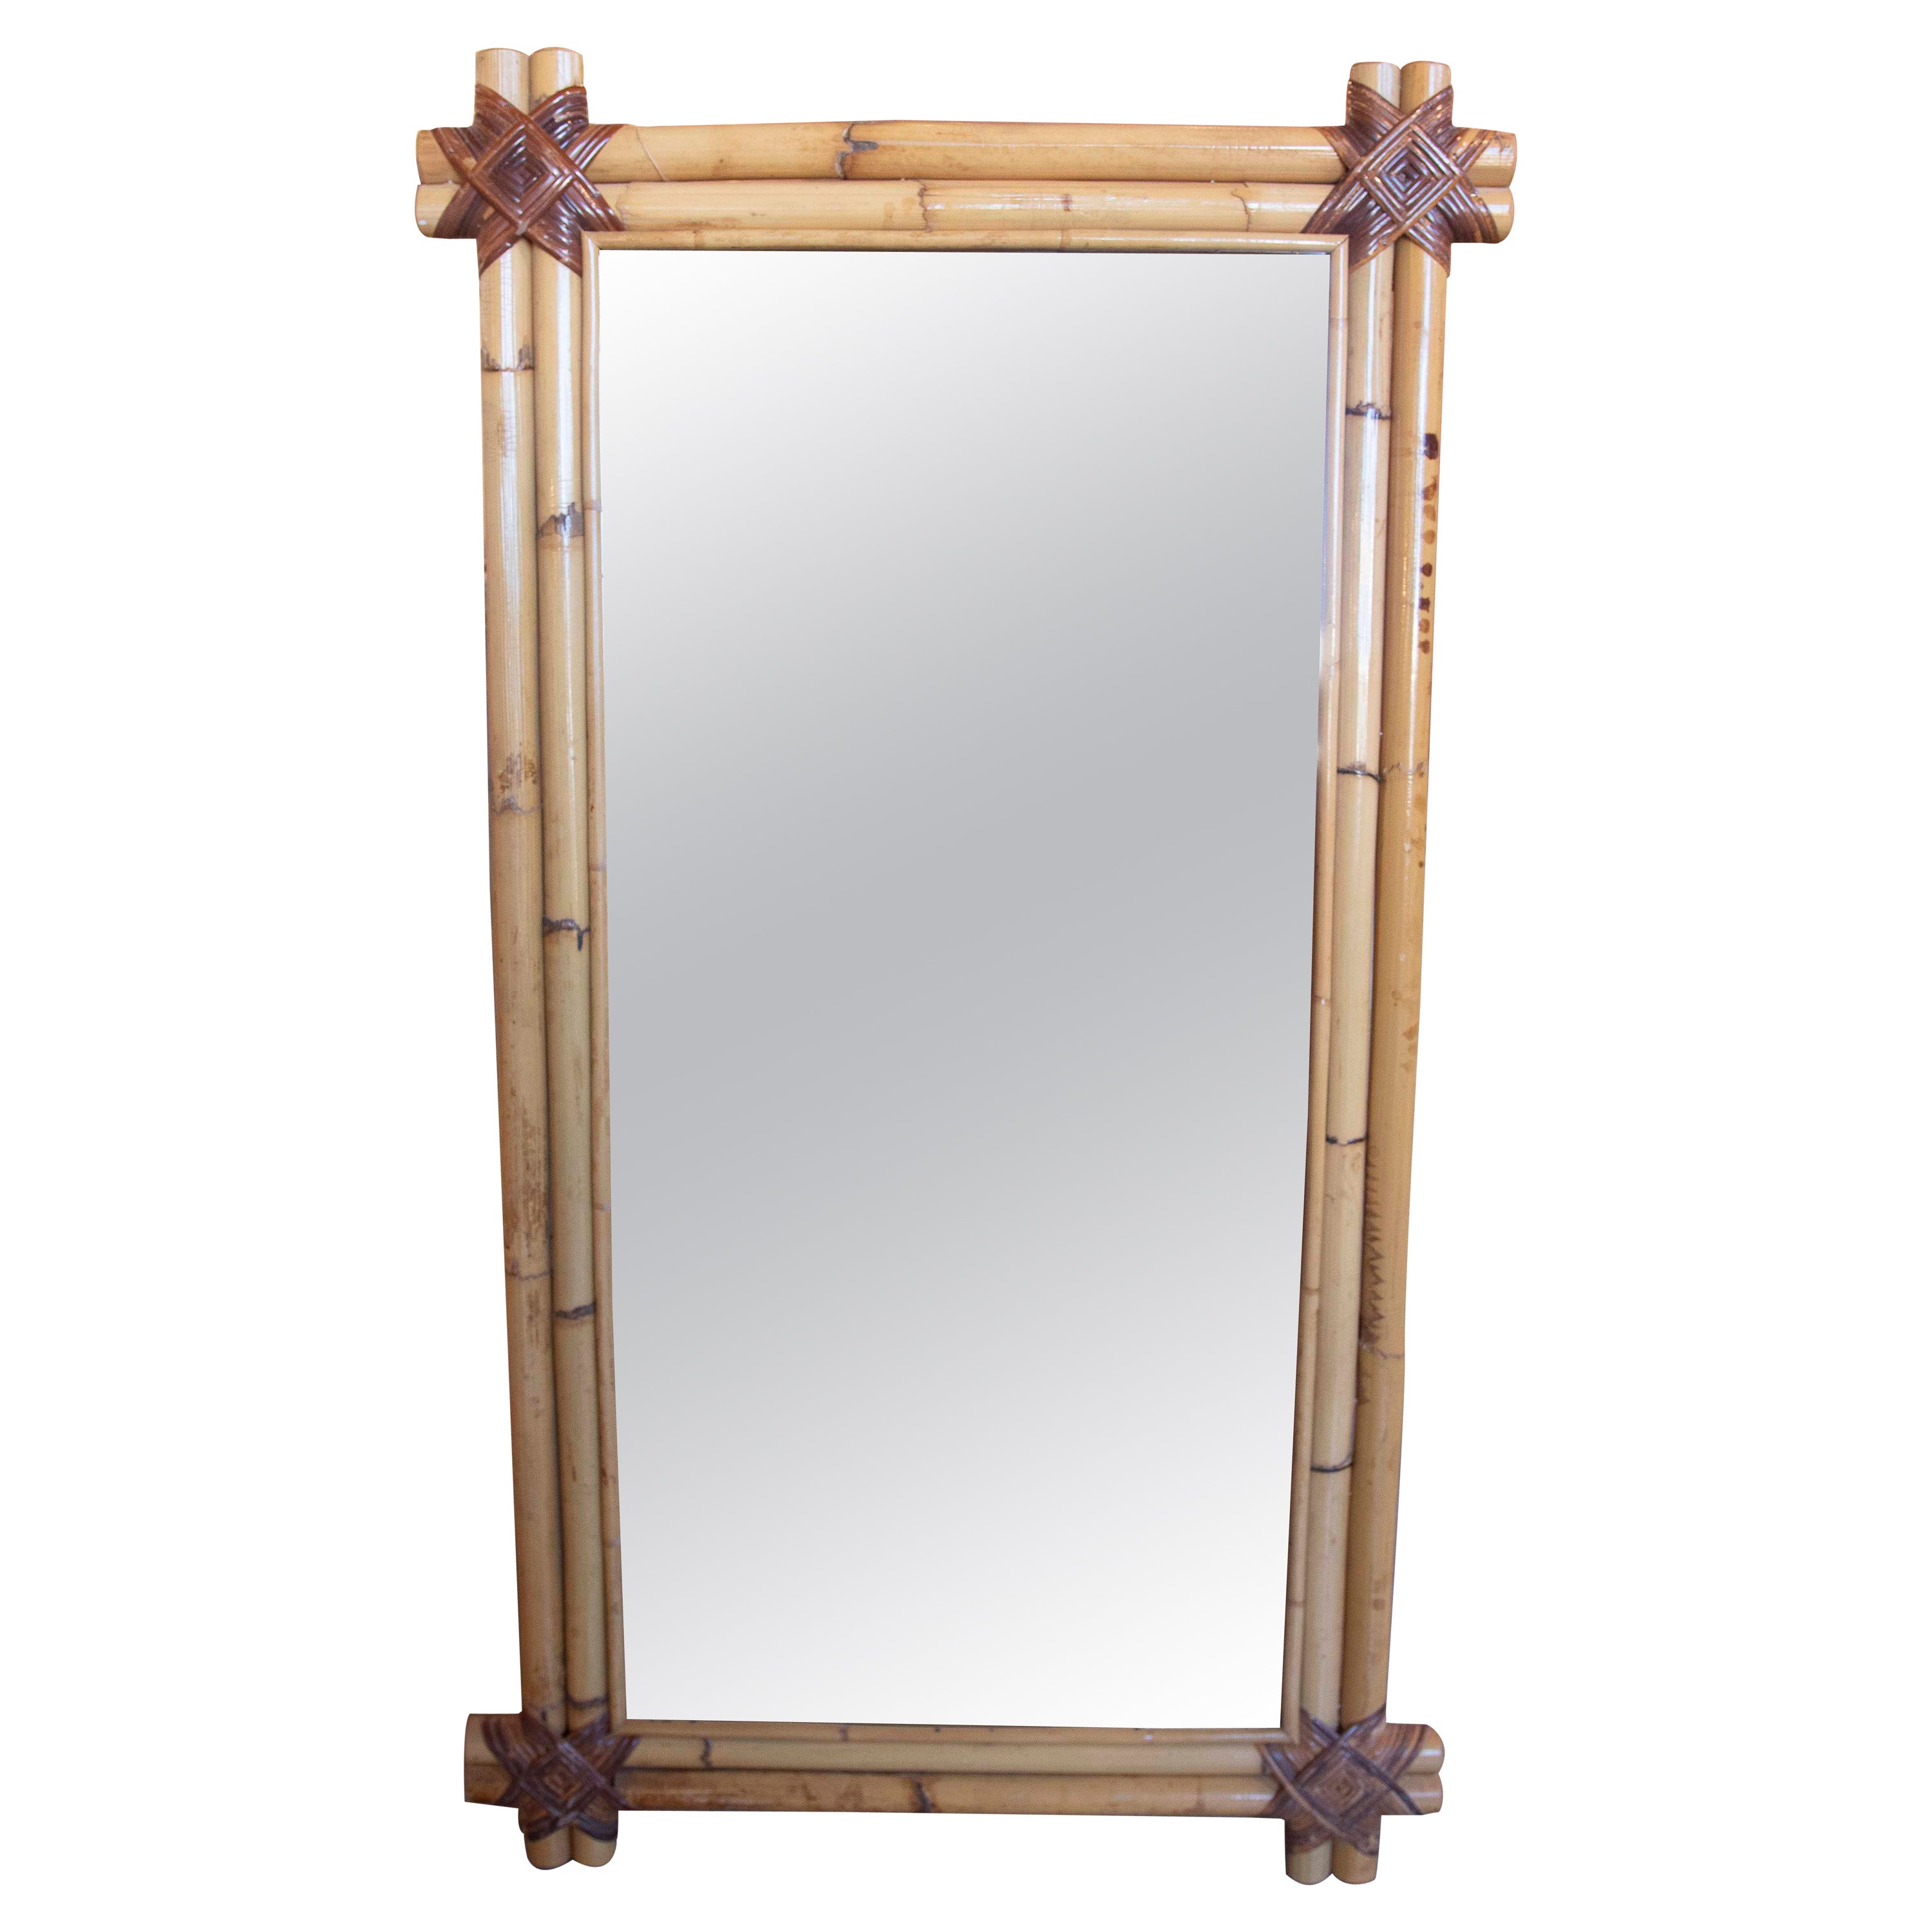 1980s Spanish Bamboo Rectangular Wall Mirror  For Sale